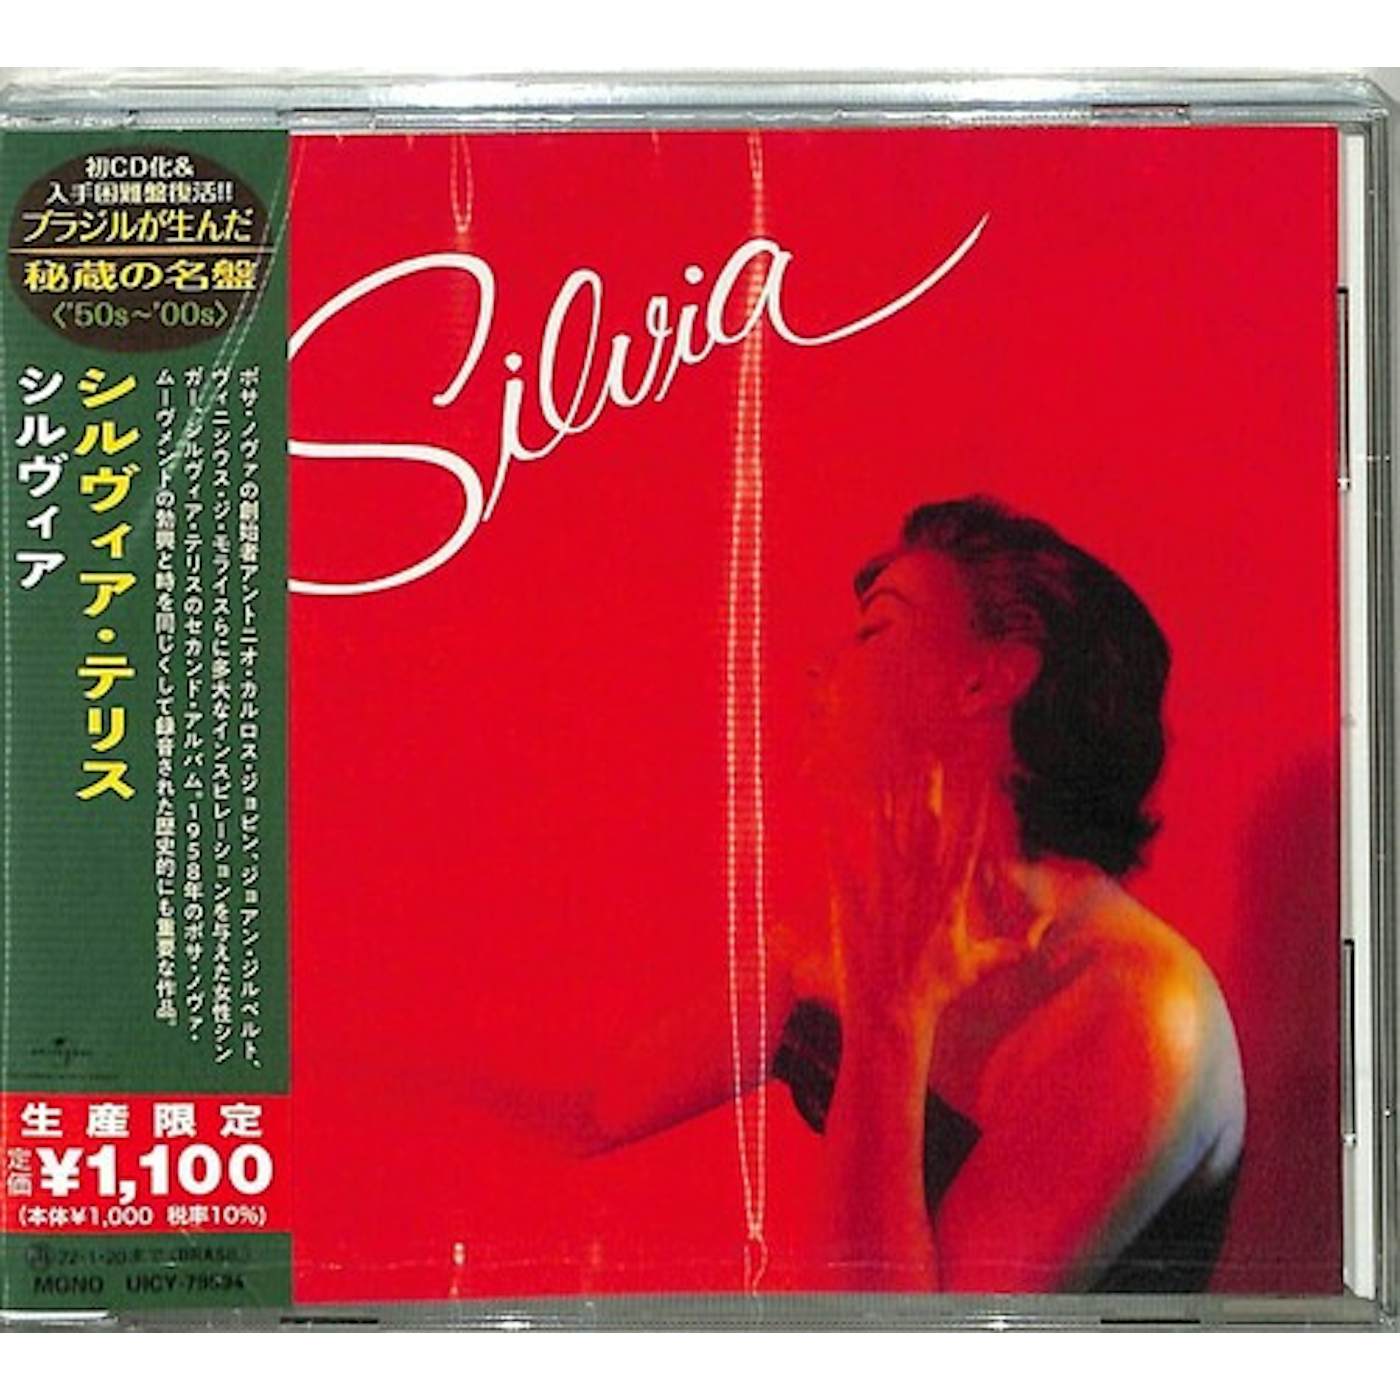 Sylvia Telles SILVIA CD